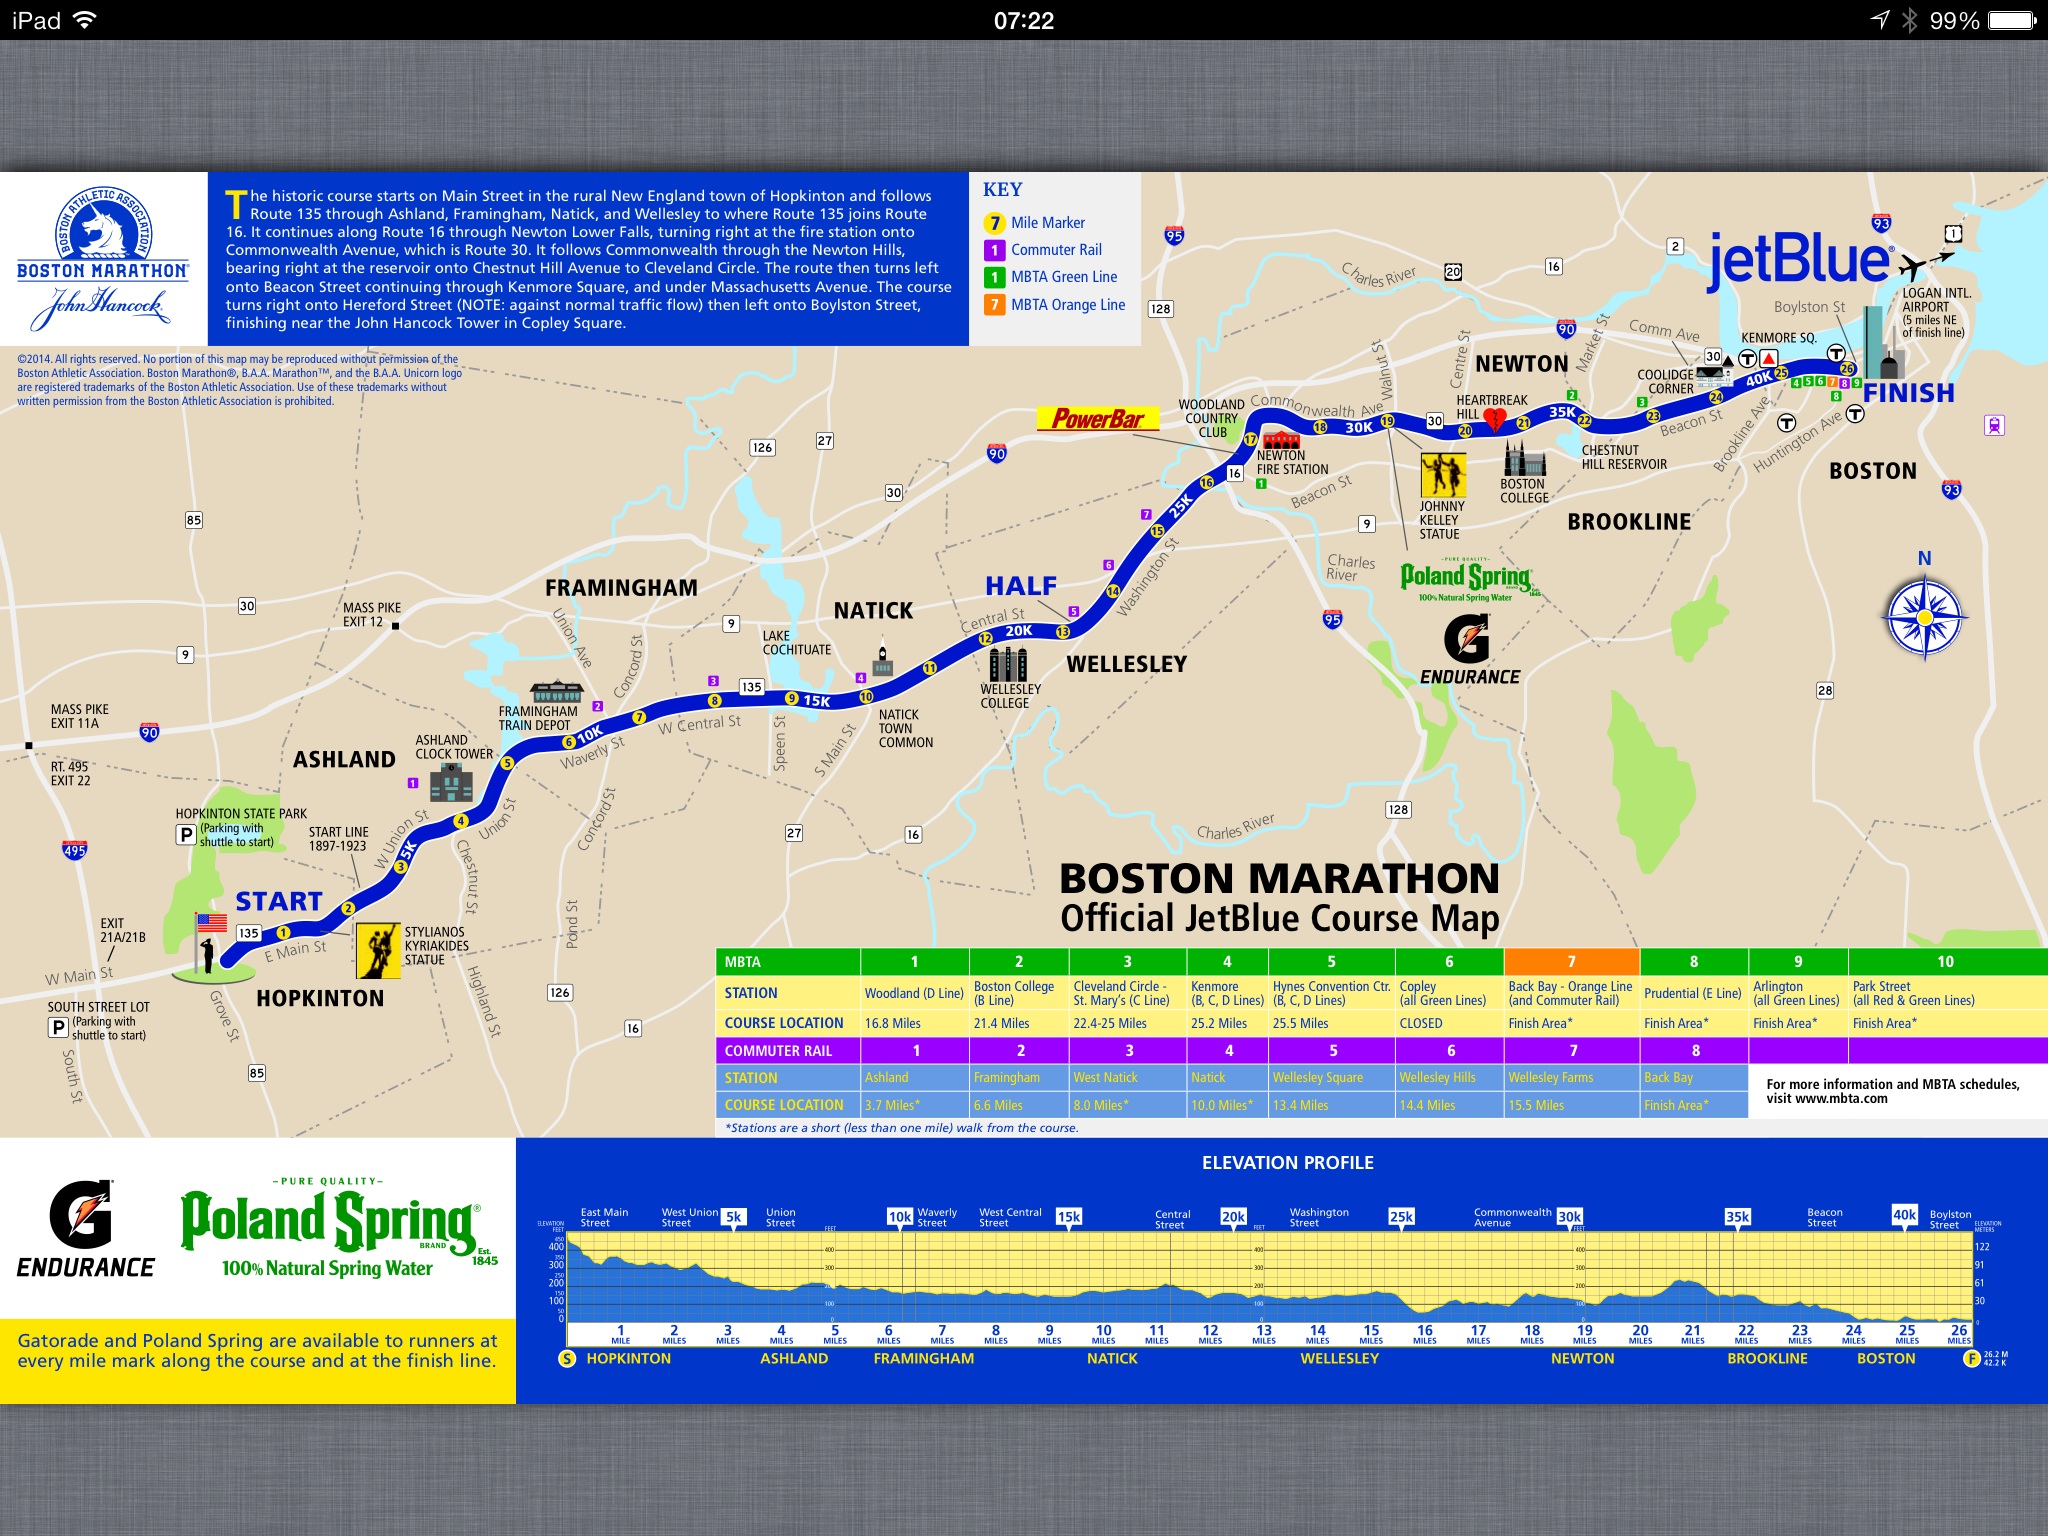 Bostonmarathon map, train and subway stations and elevation change.